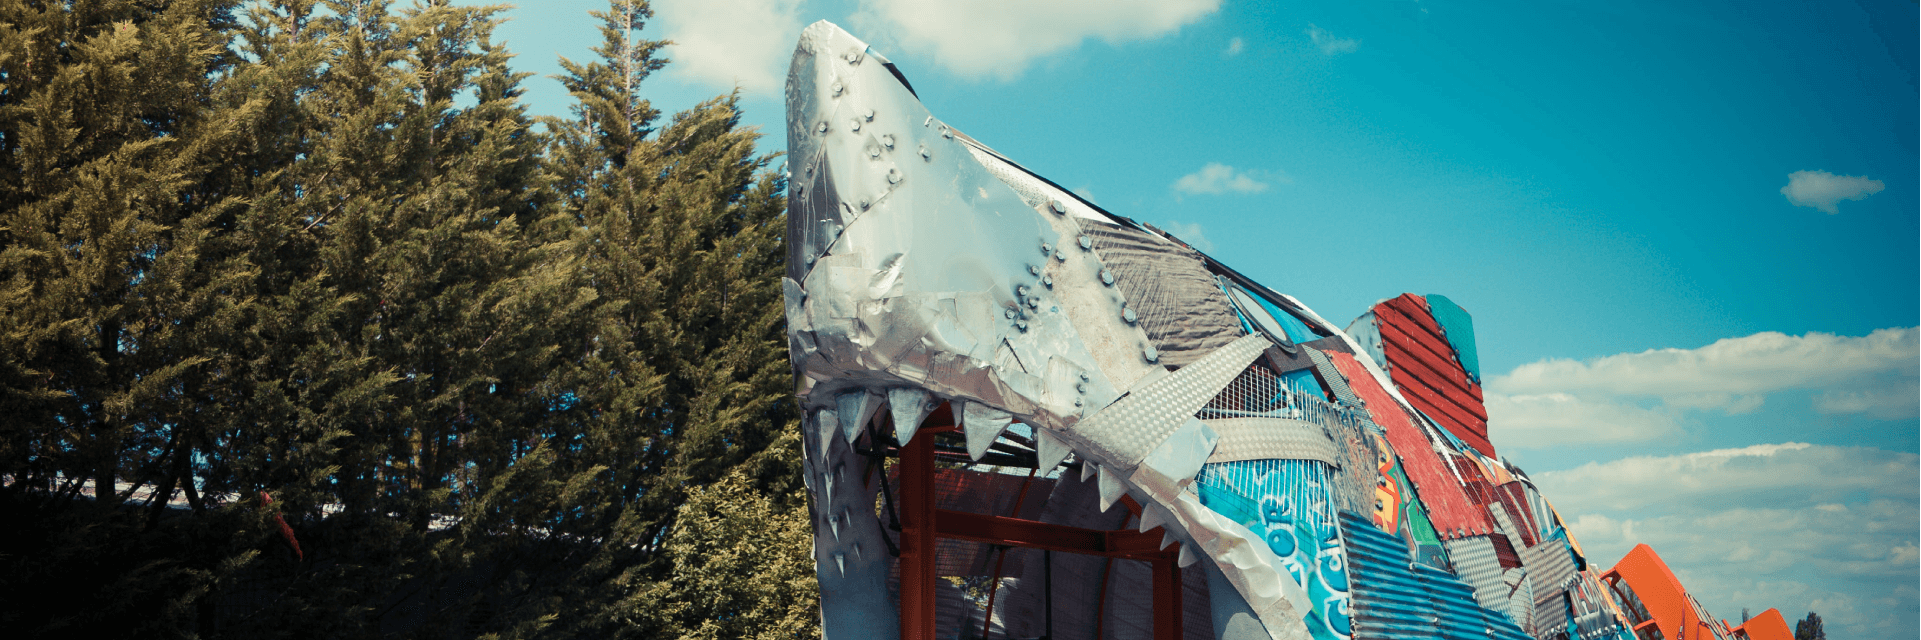 Thorpe Shark Entrance